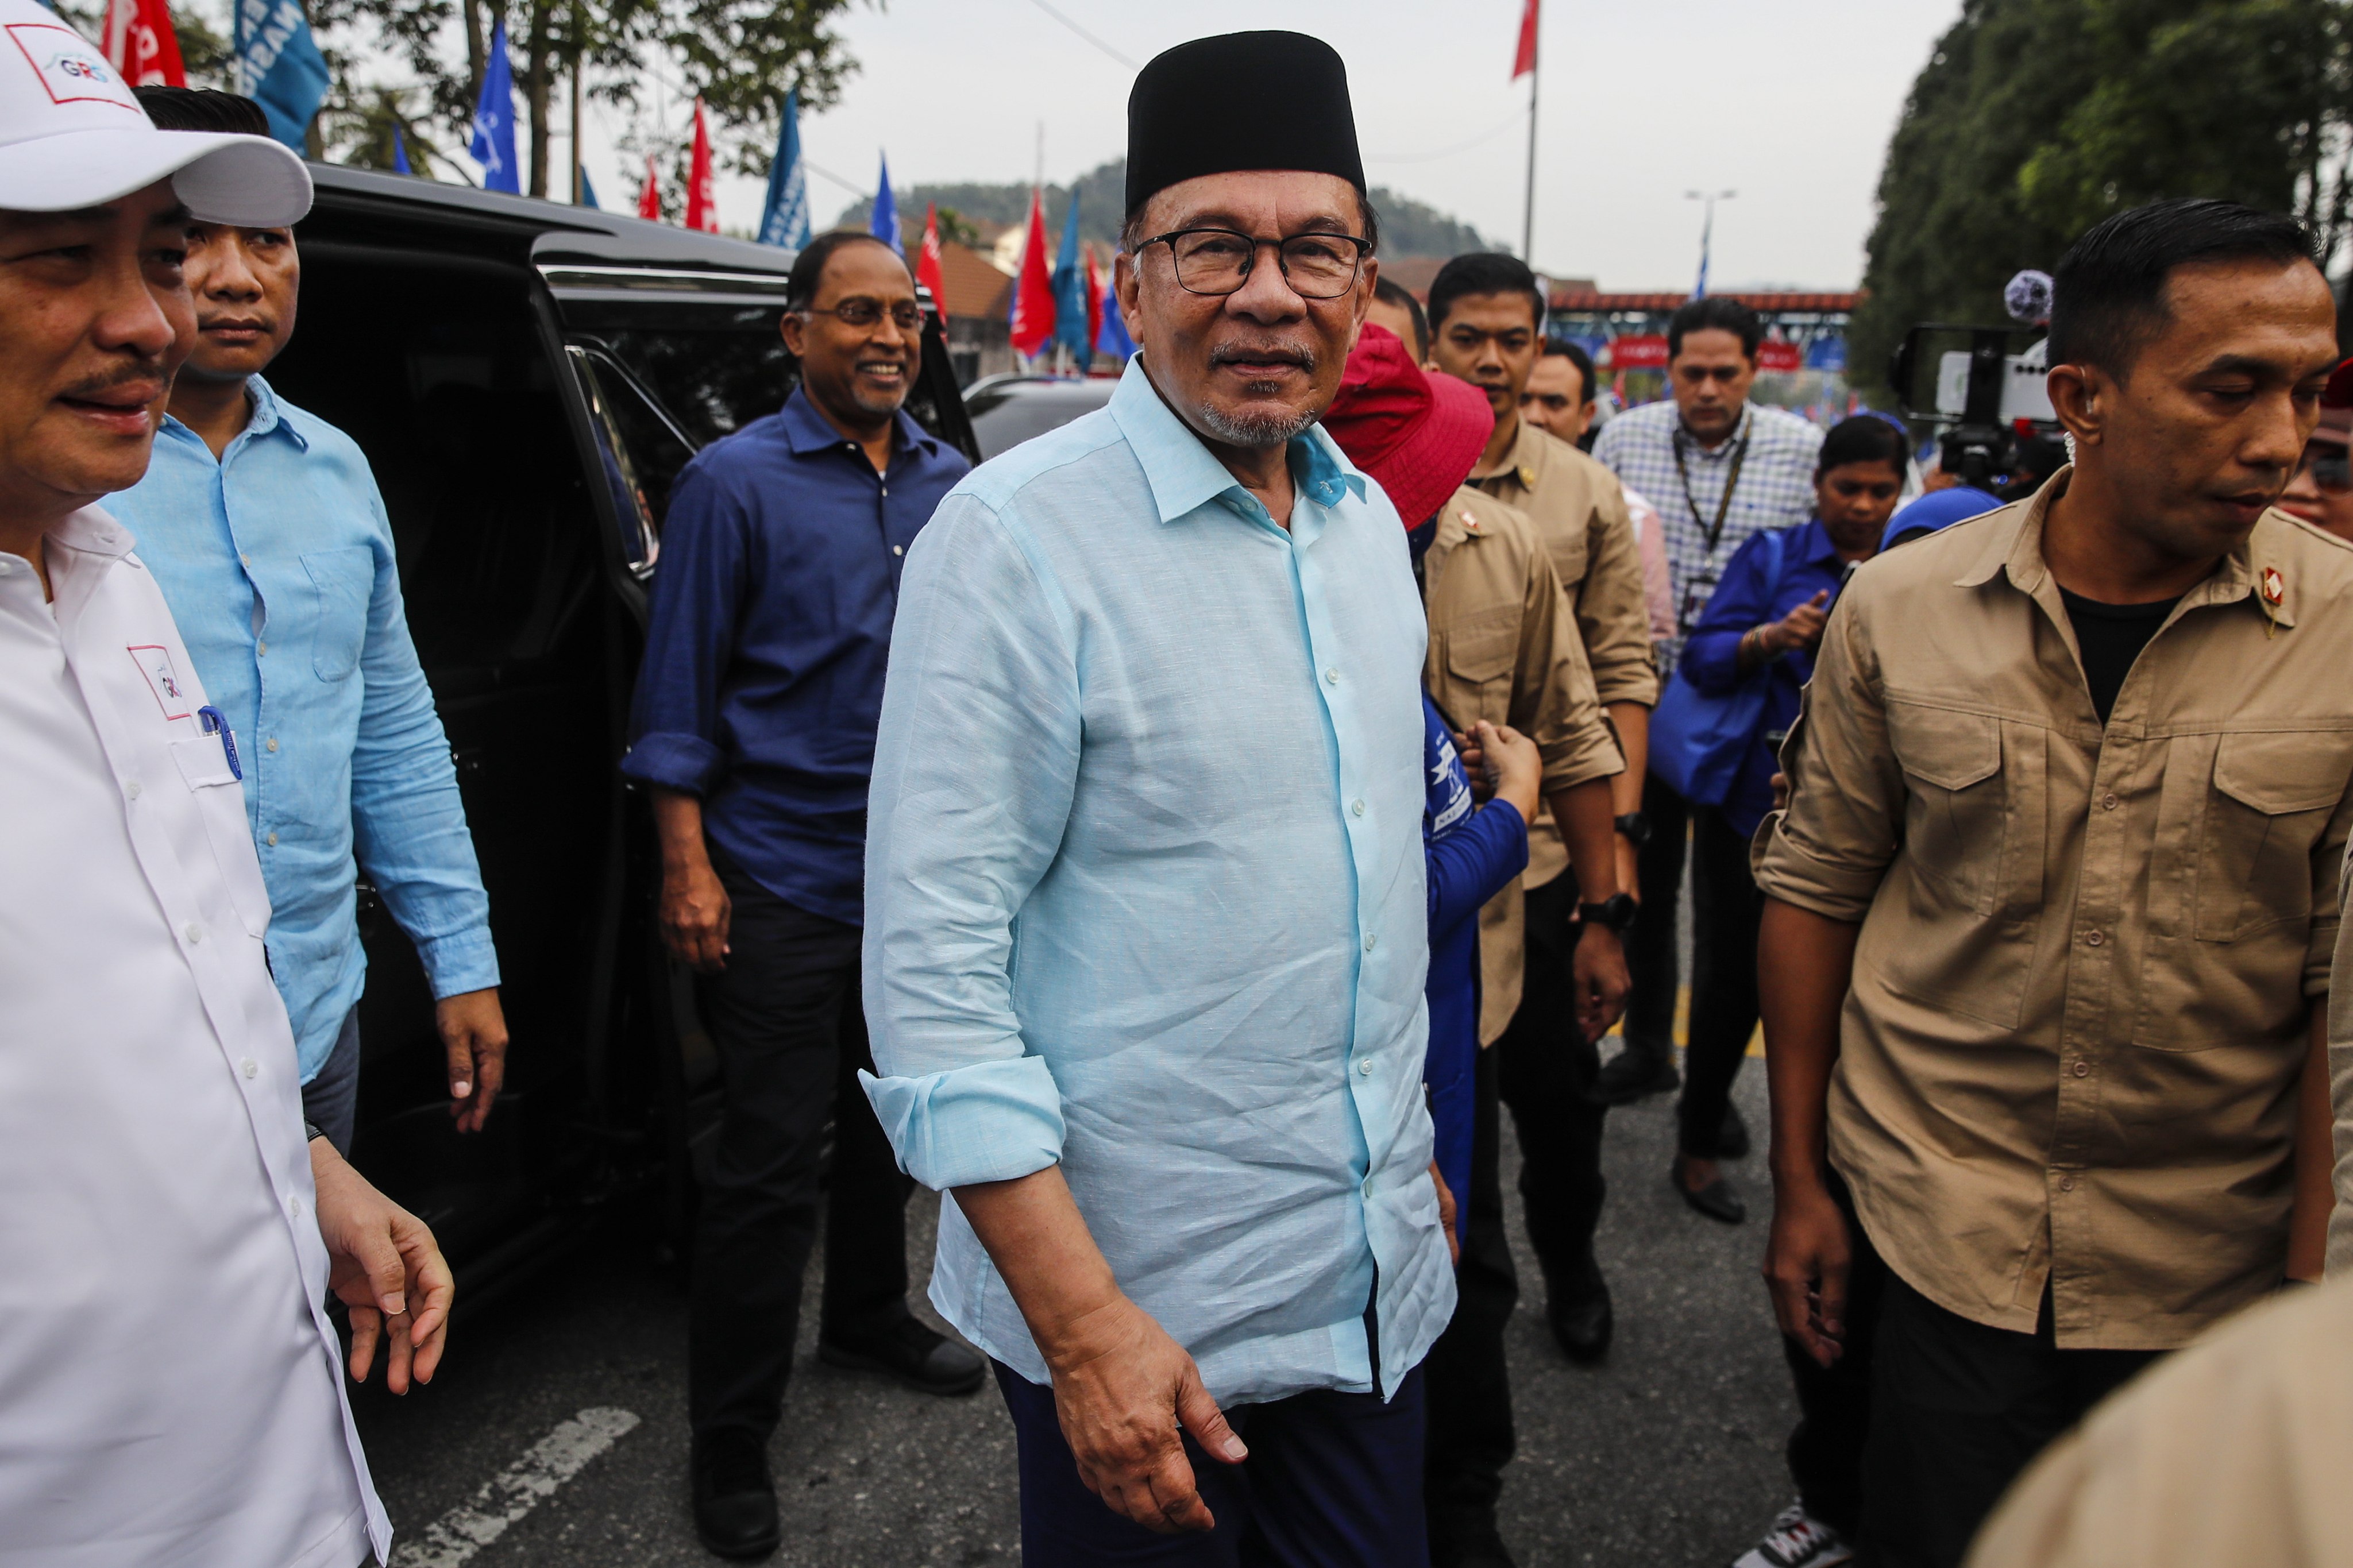 Malaysian Prime Minister arrives near the nomination centre in Gombak, outside Kuala Lumpur, on July 29. Photo: EPA-EFE